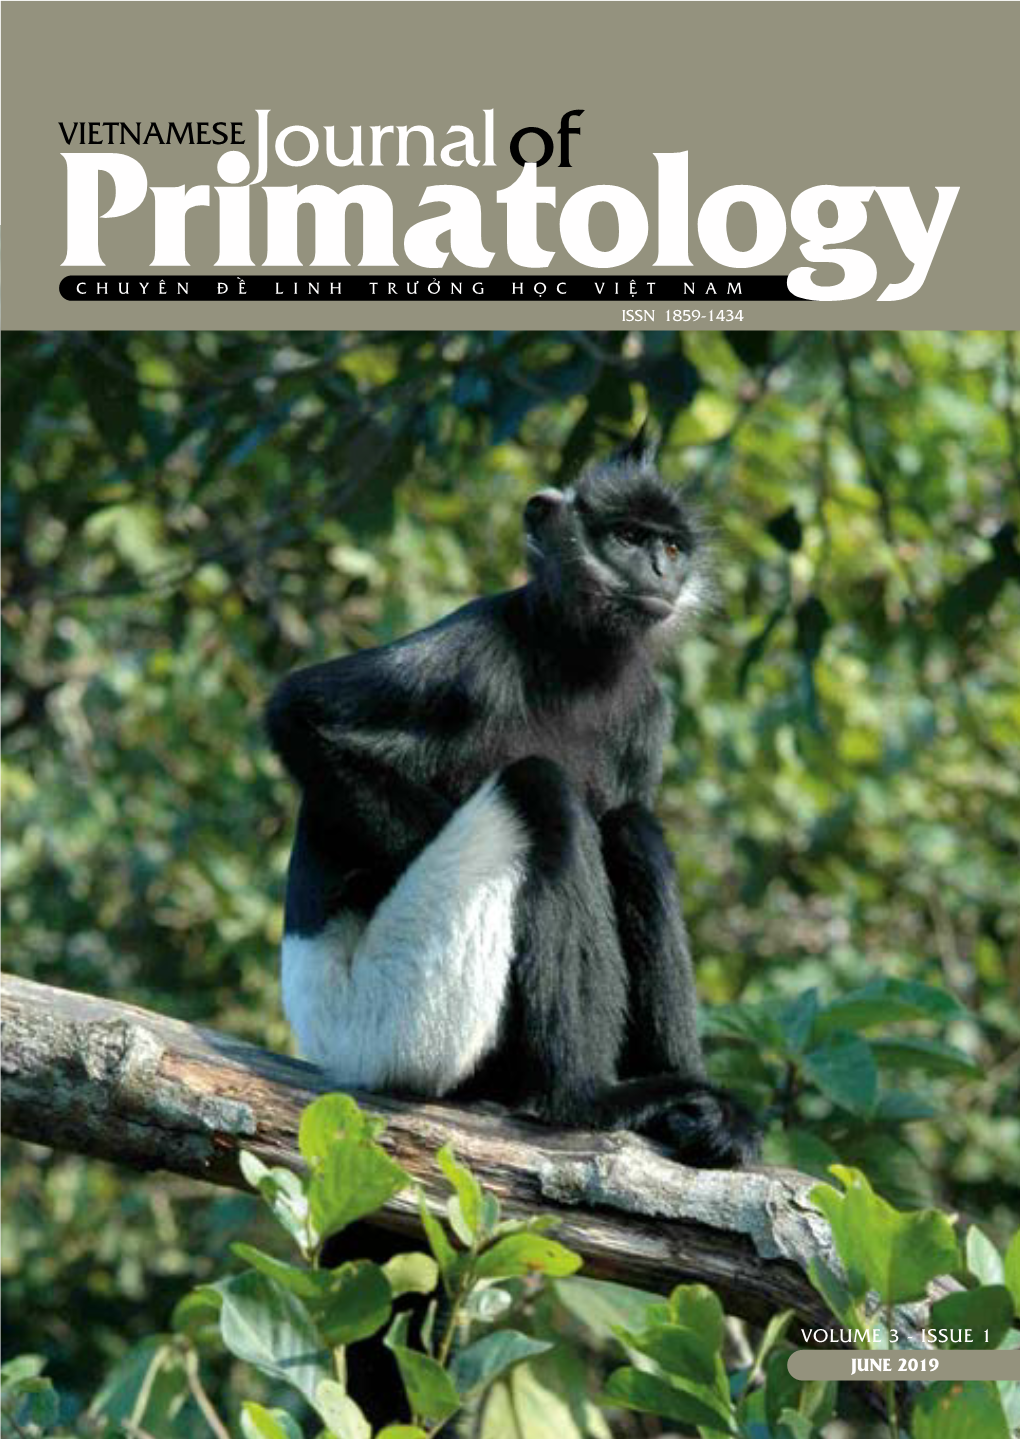 JUNE 2019 I Vietnamese Journal of Primatology EDITORIAL